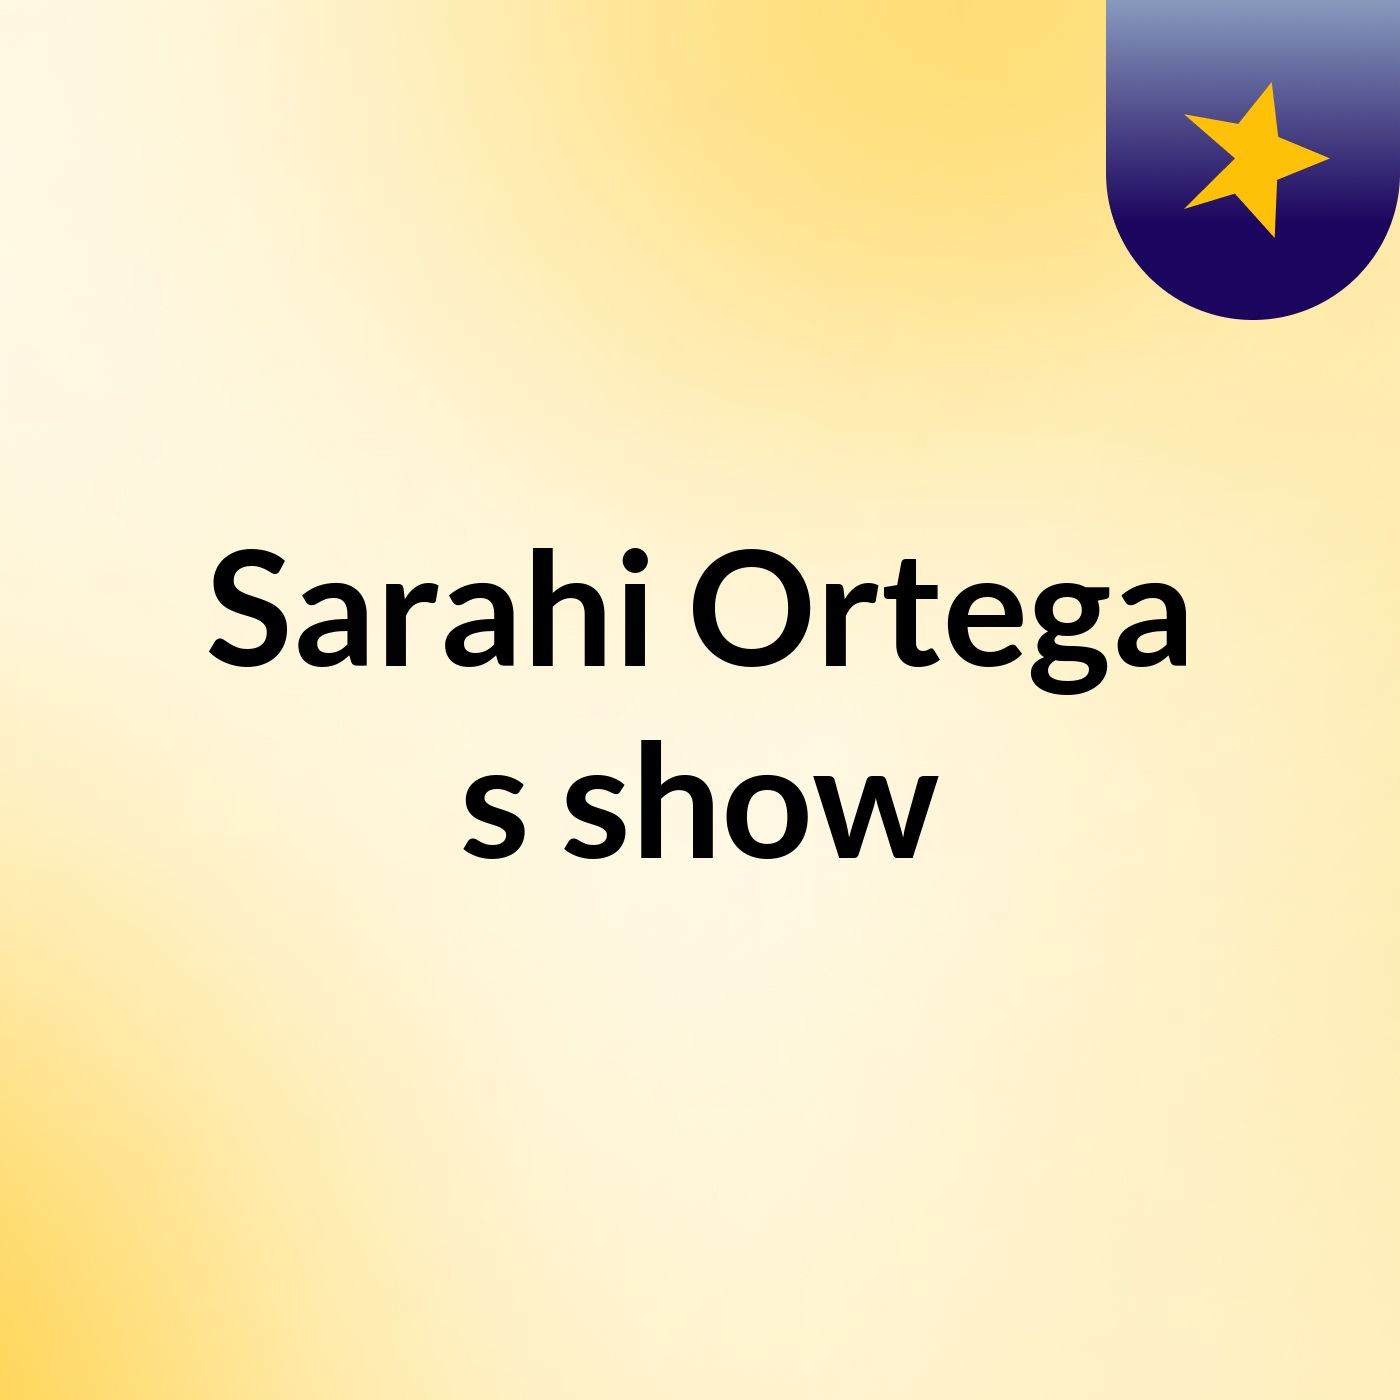 Sarahi Ortega's show